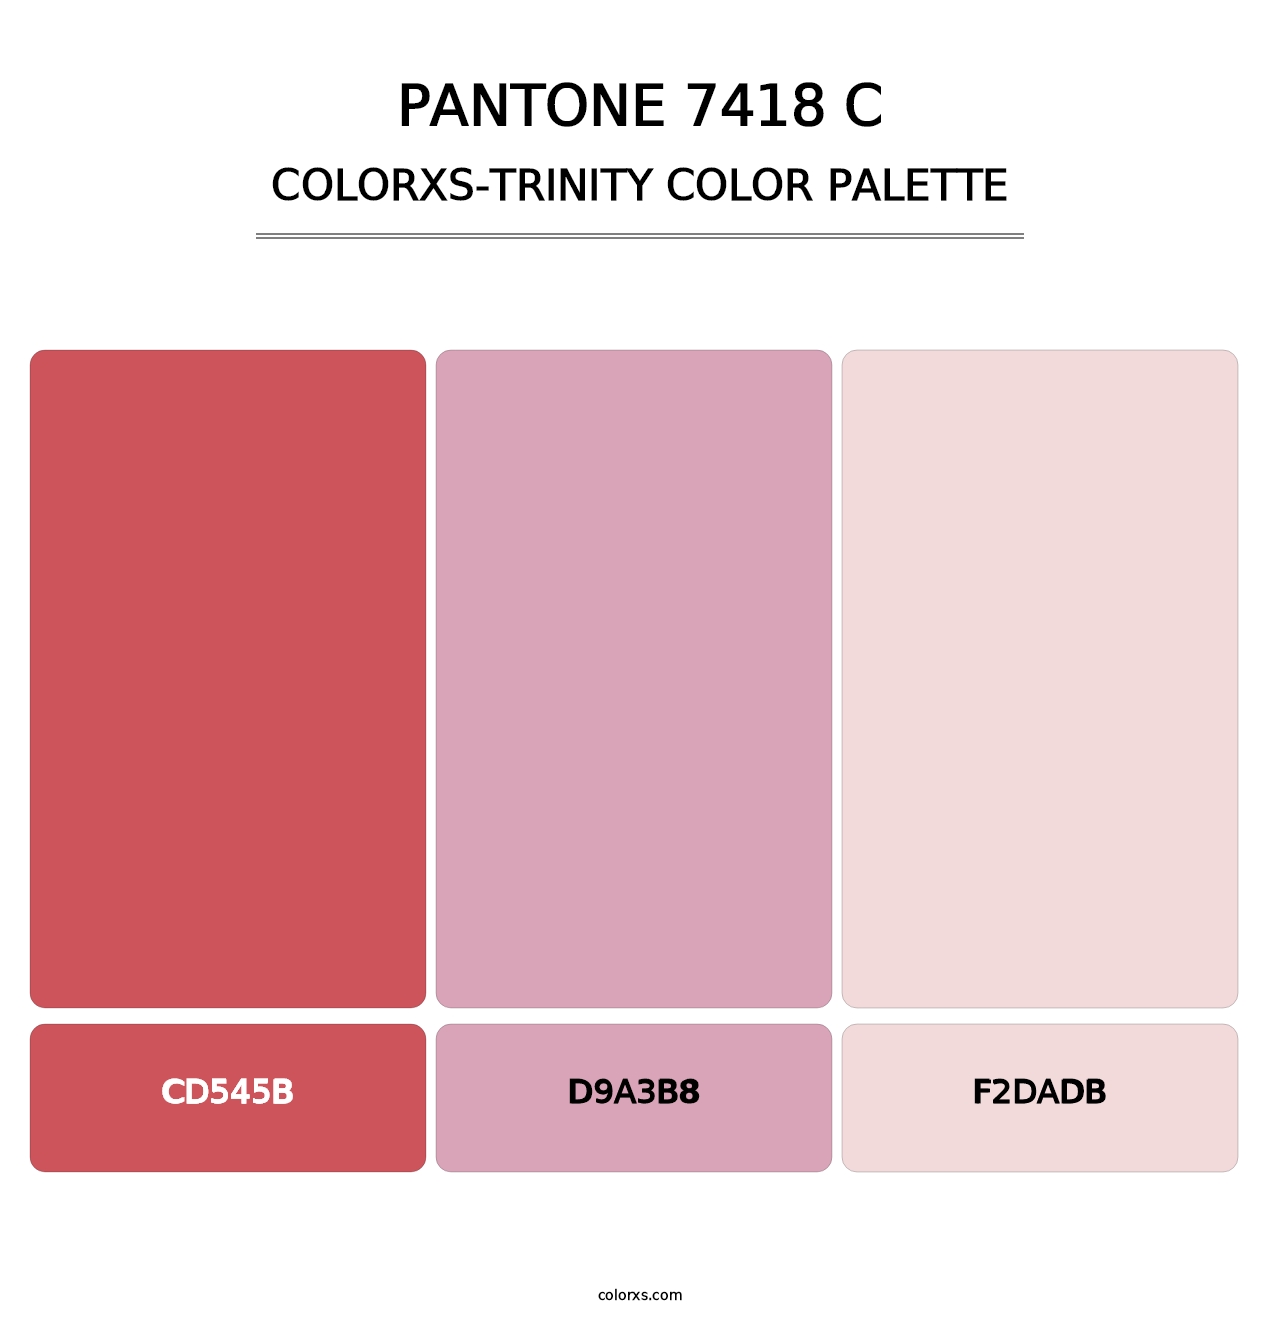 PANTONE 7418 C - Colorxs Trinity Palette